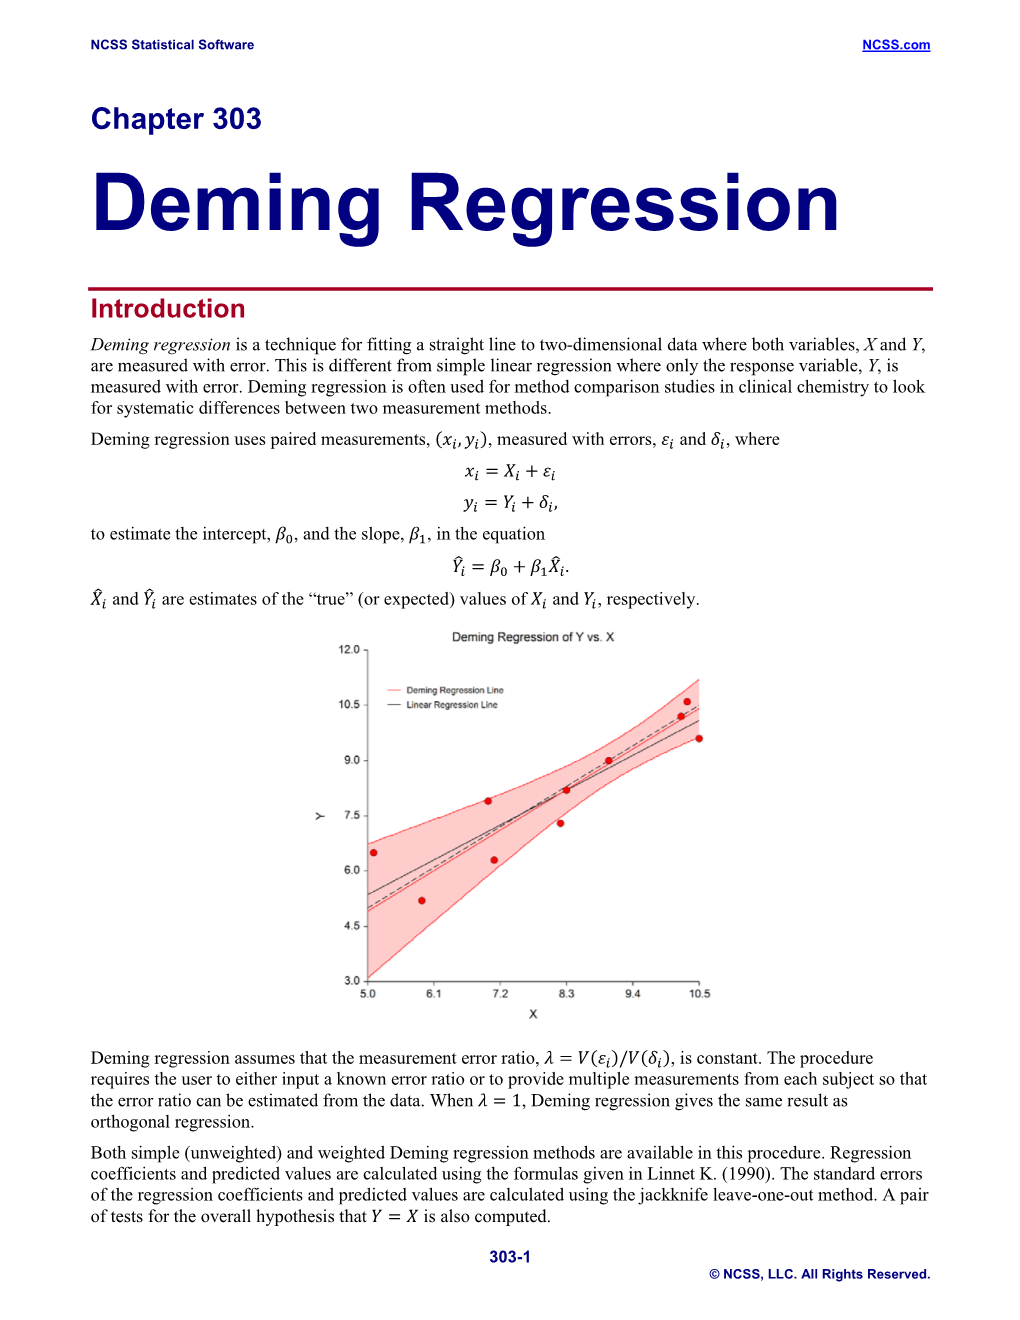 Deming Regression